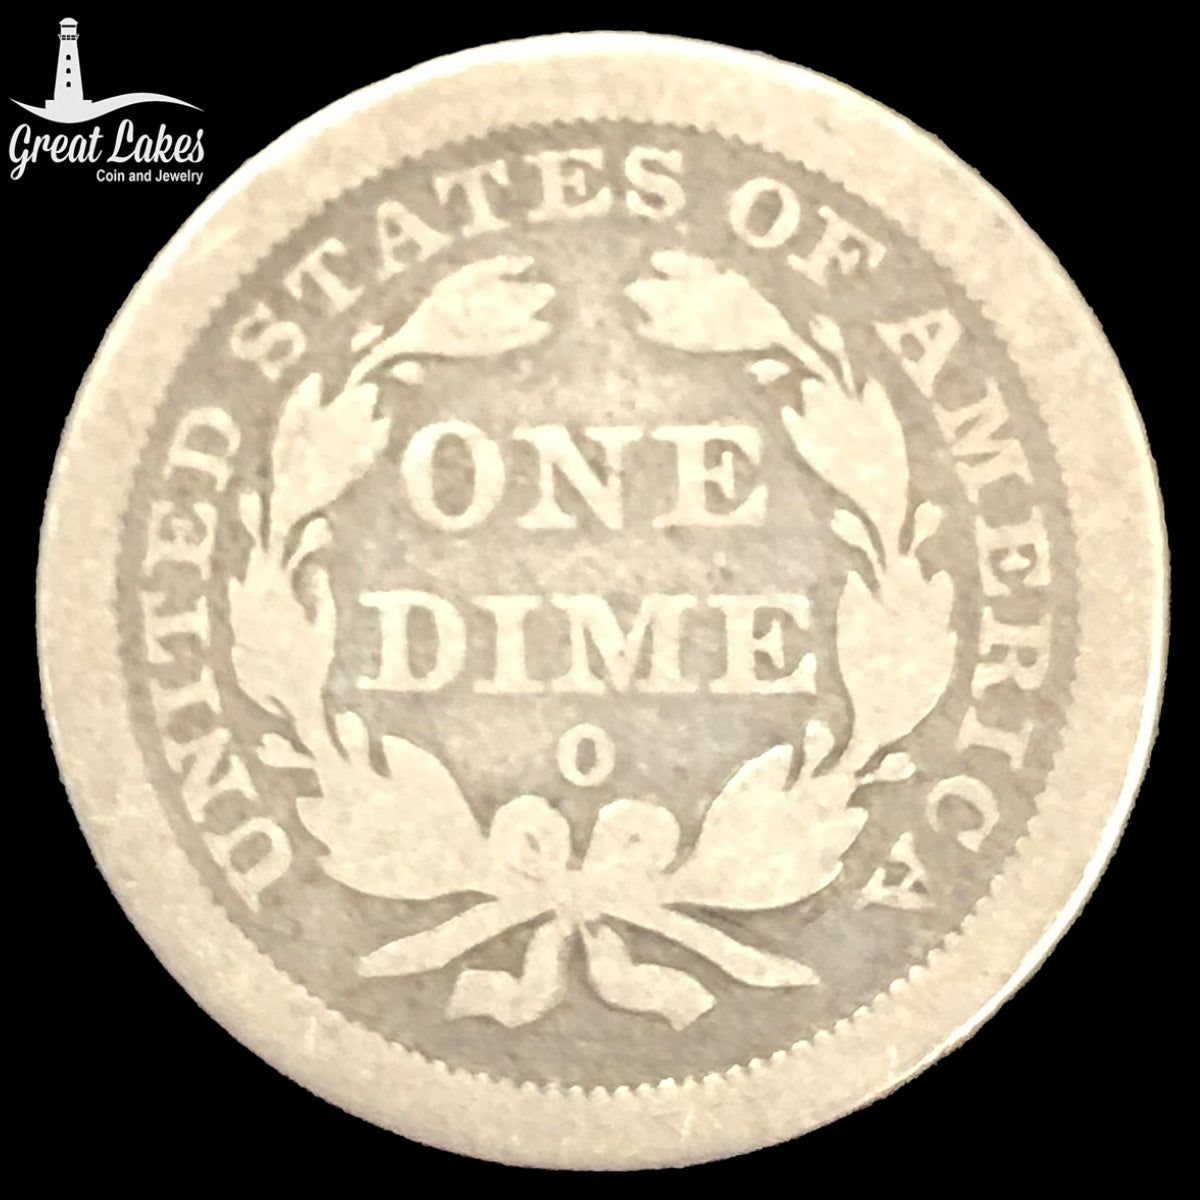 1842-O Seated Liberty Dime (VG)